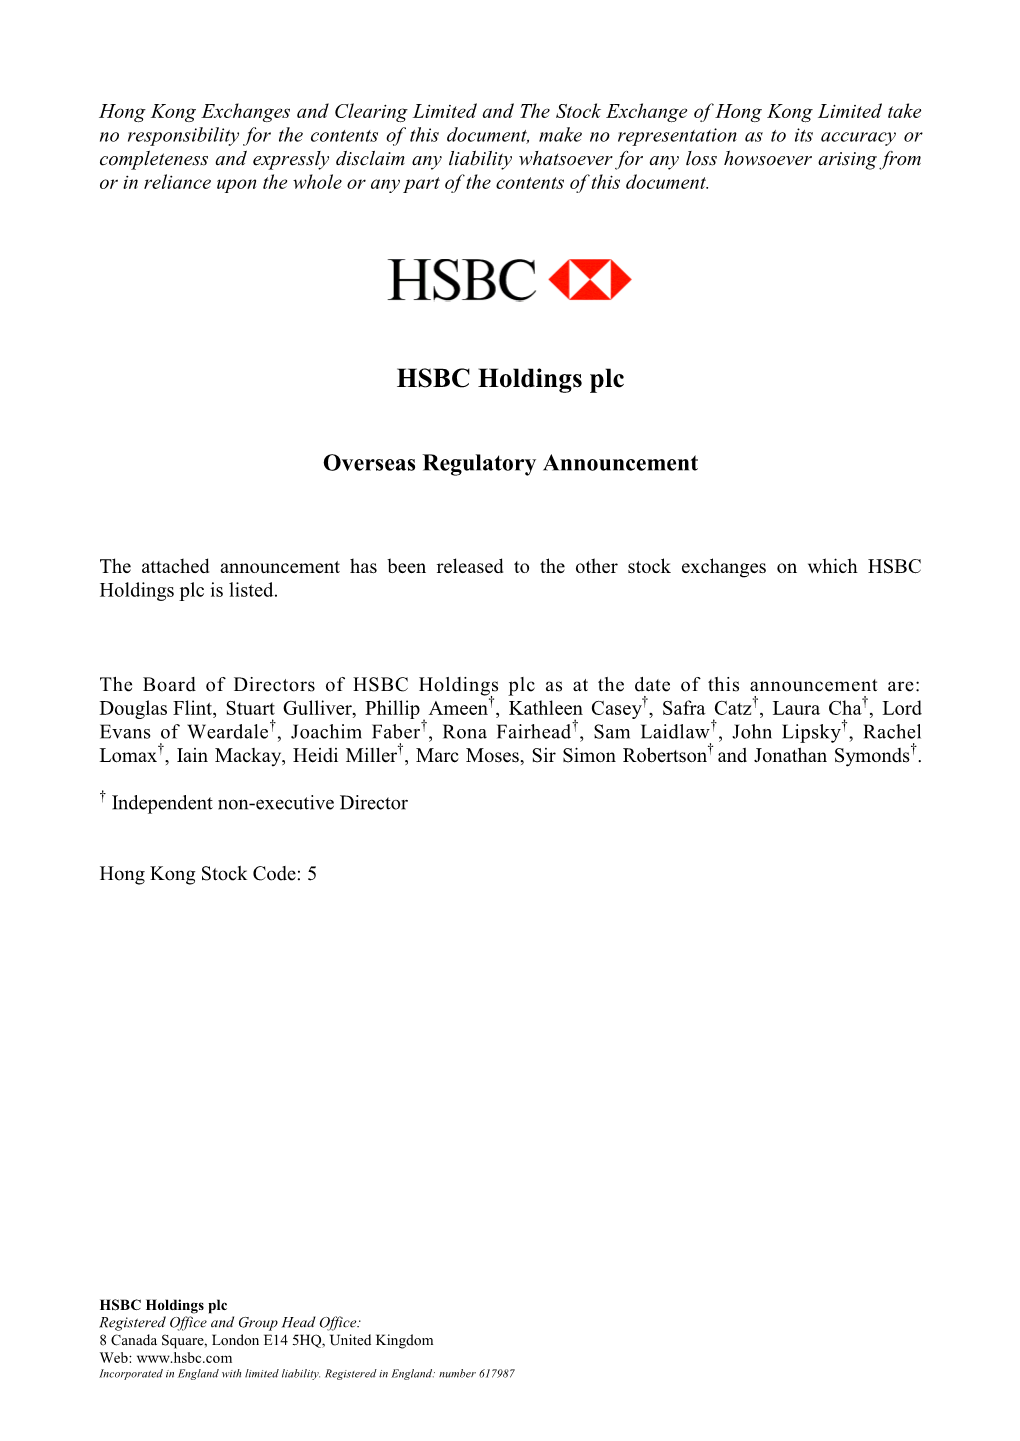 Hang Seng Bank, a 62.14% Indirectly Held Subsidiary of HSBC Holdings Plc